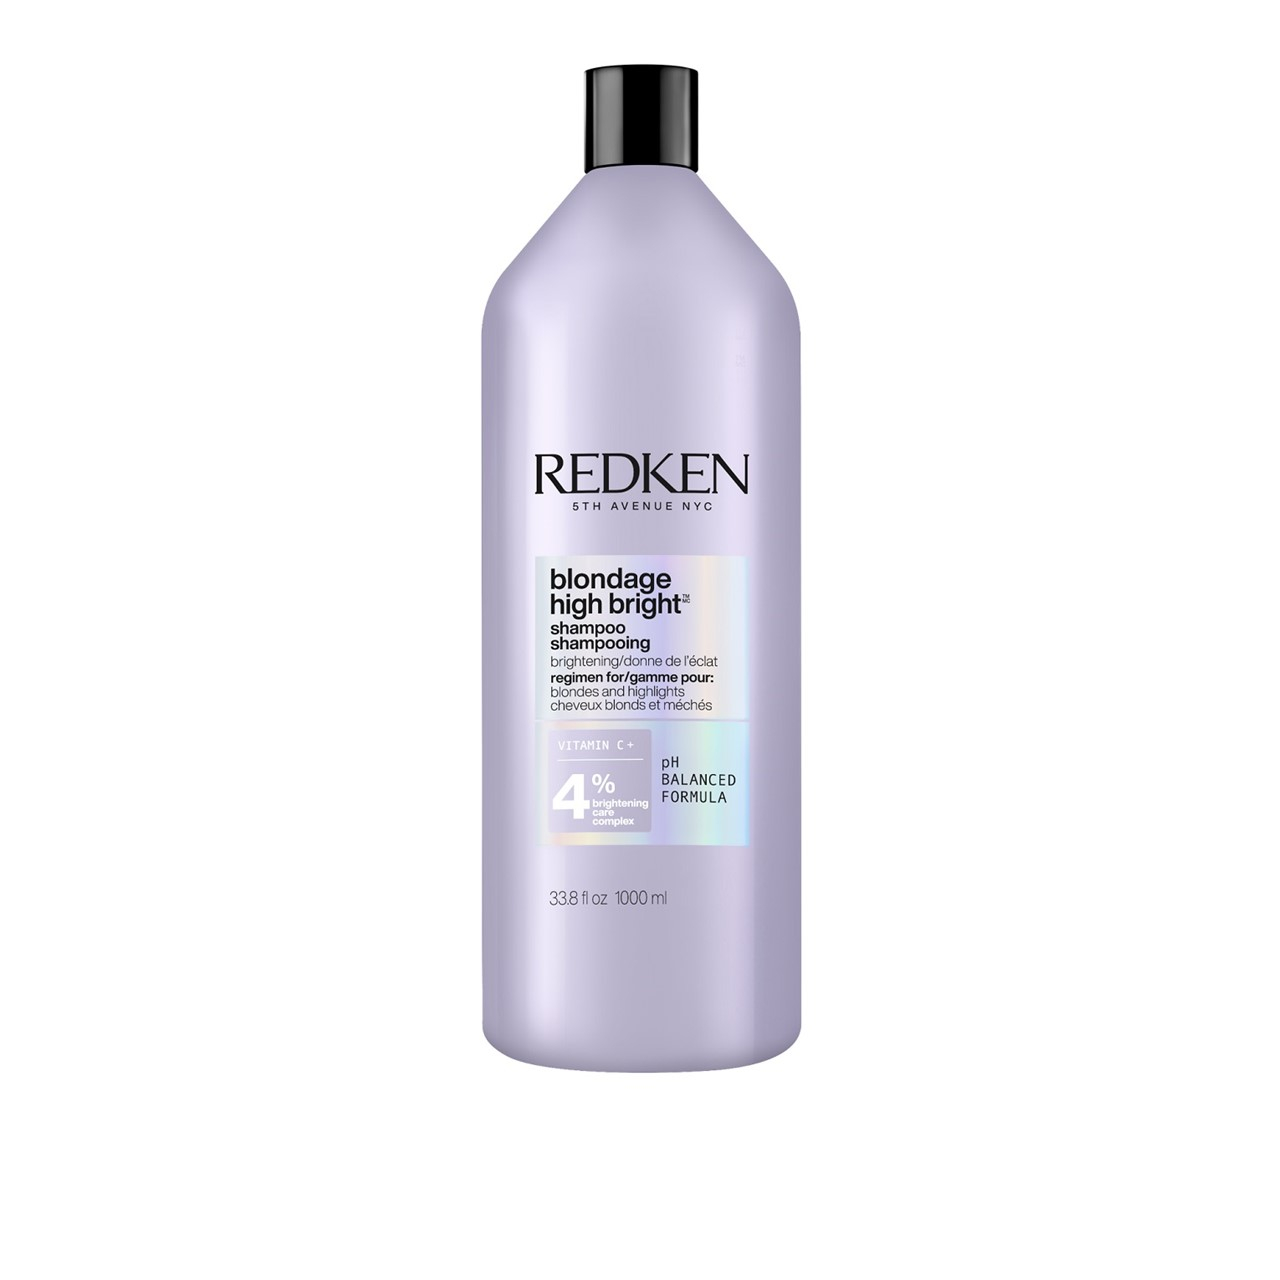 Redken Blondage High Bright Shampoo 1L (33.81fl oz)